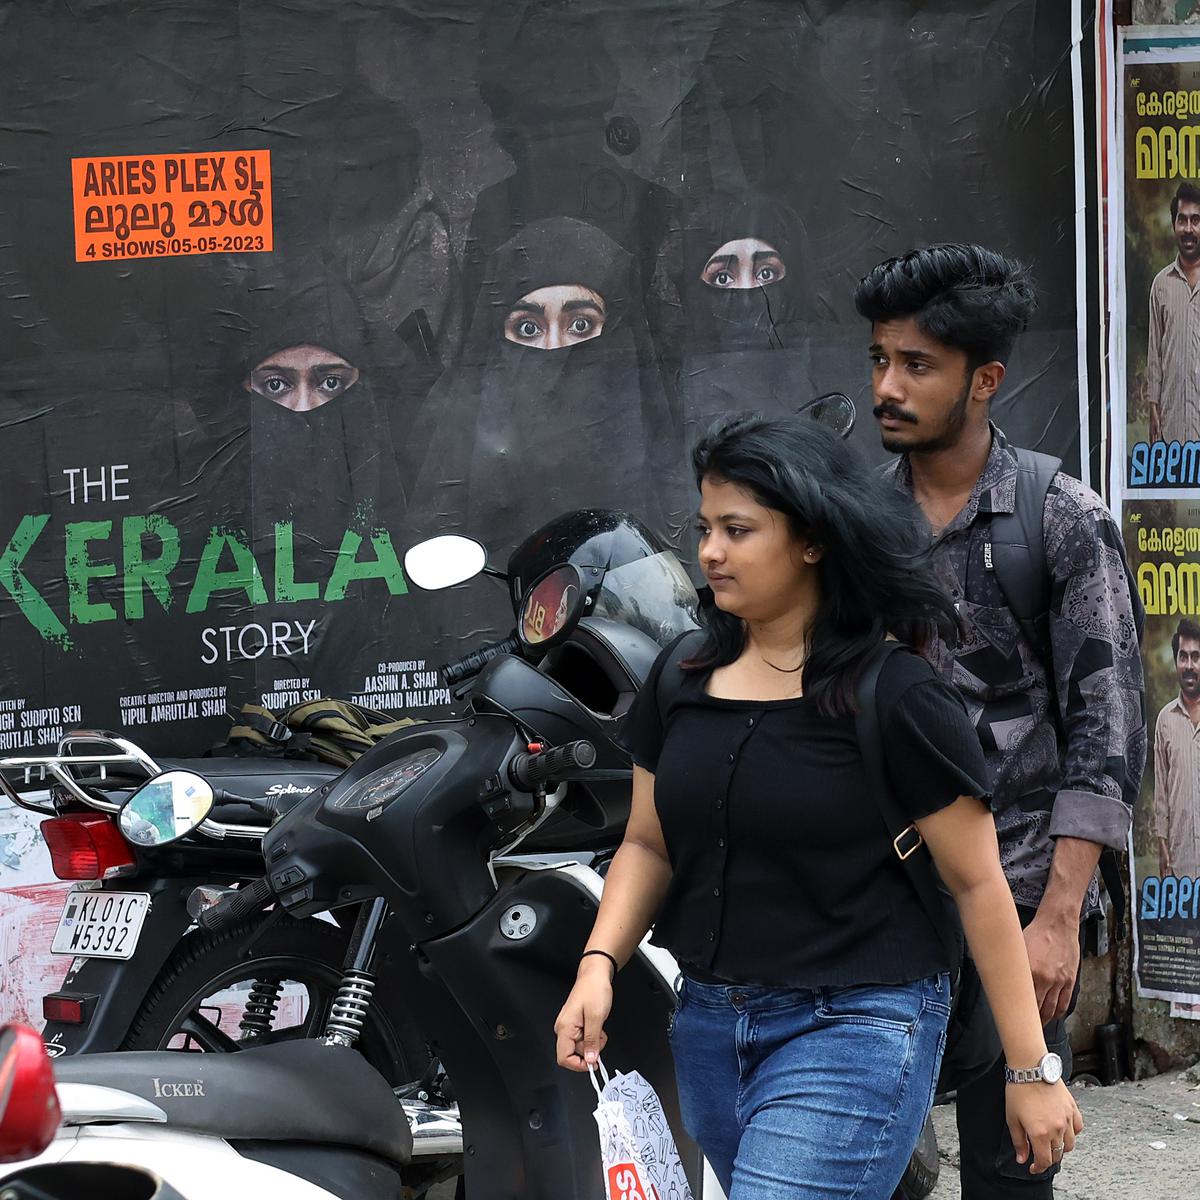 The Kerala Story' movie review: Adah Sharma's performance marred by  half-truths and an emotionally exploitative gaze - The Hindu